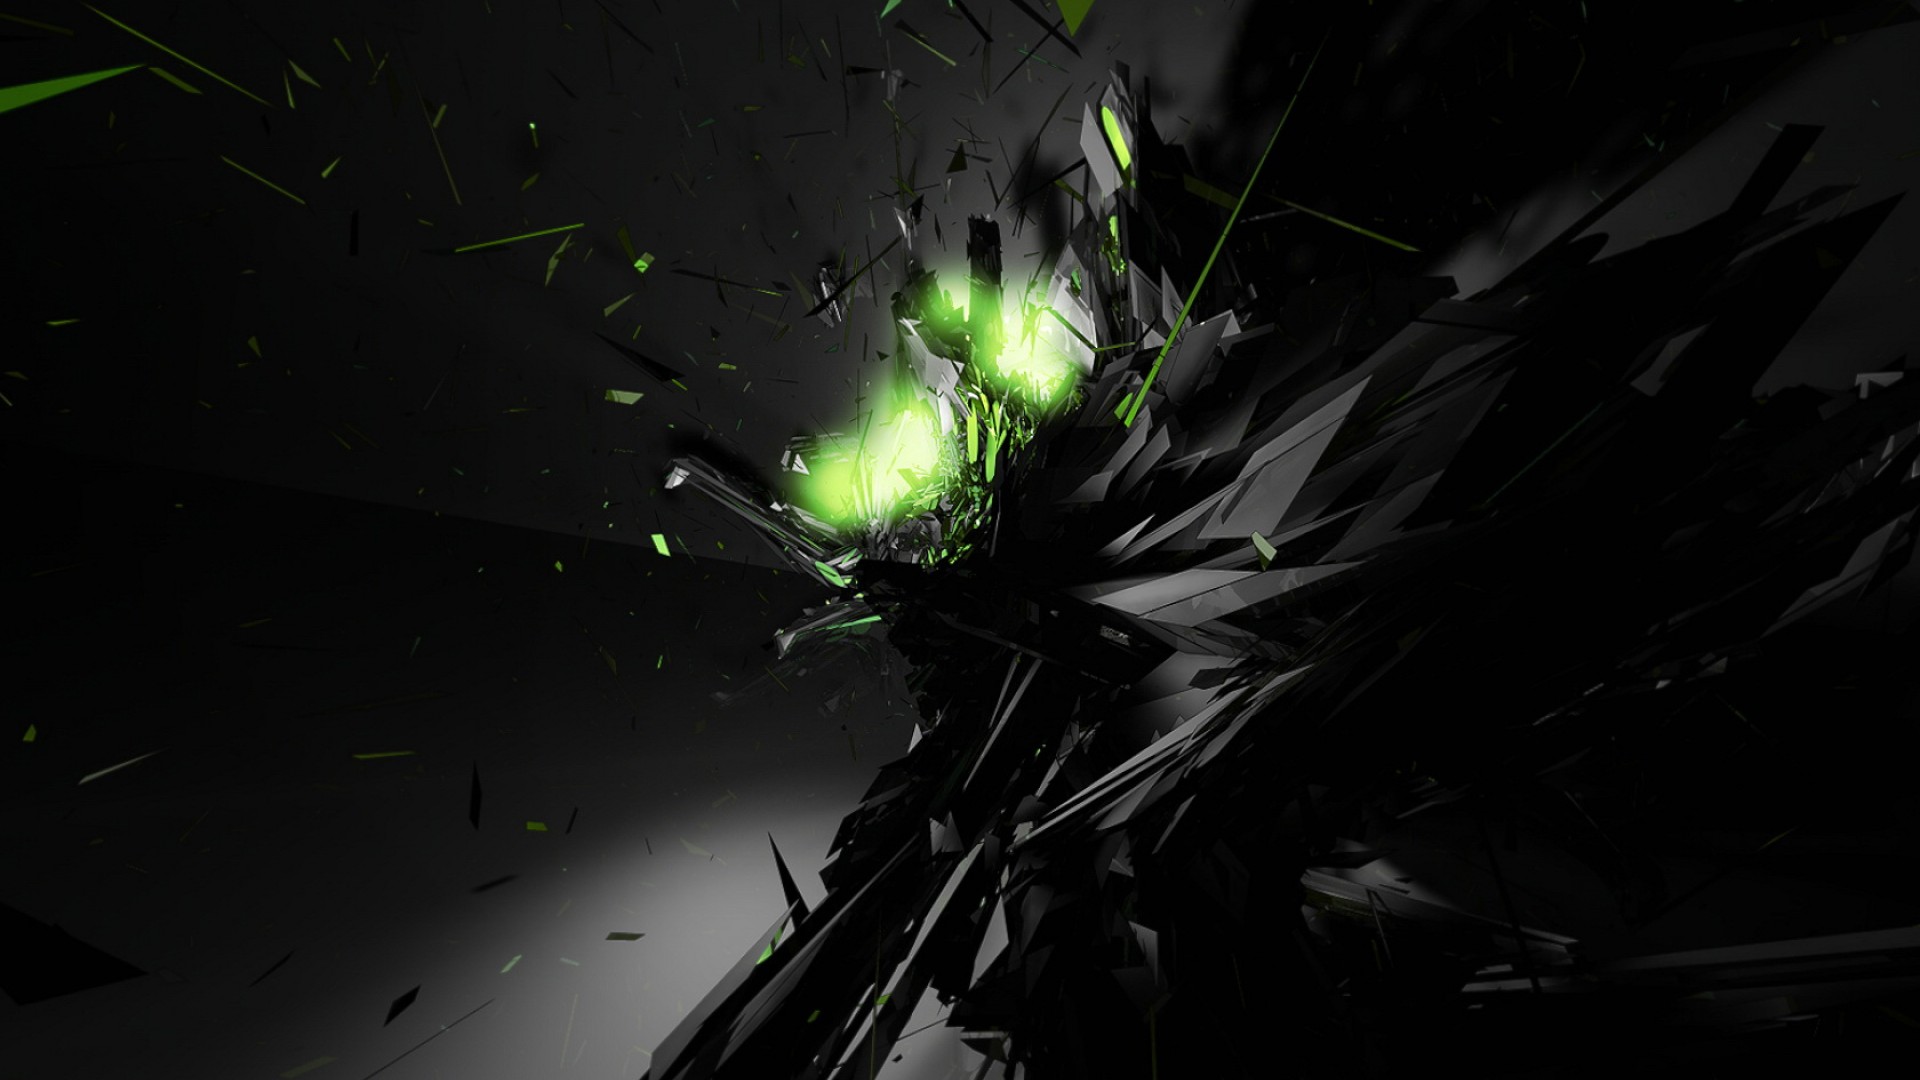 Black Abstract Green Glow Desktop Wallpaper And Make This